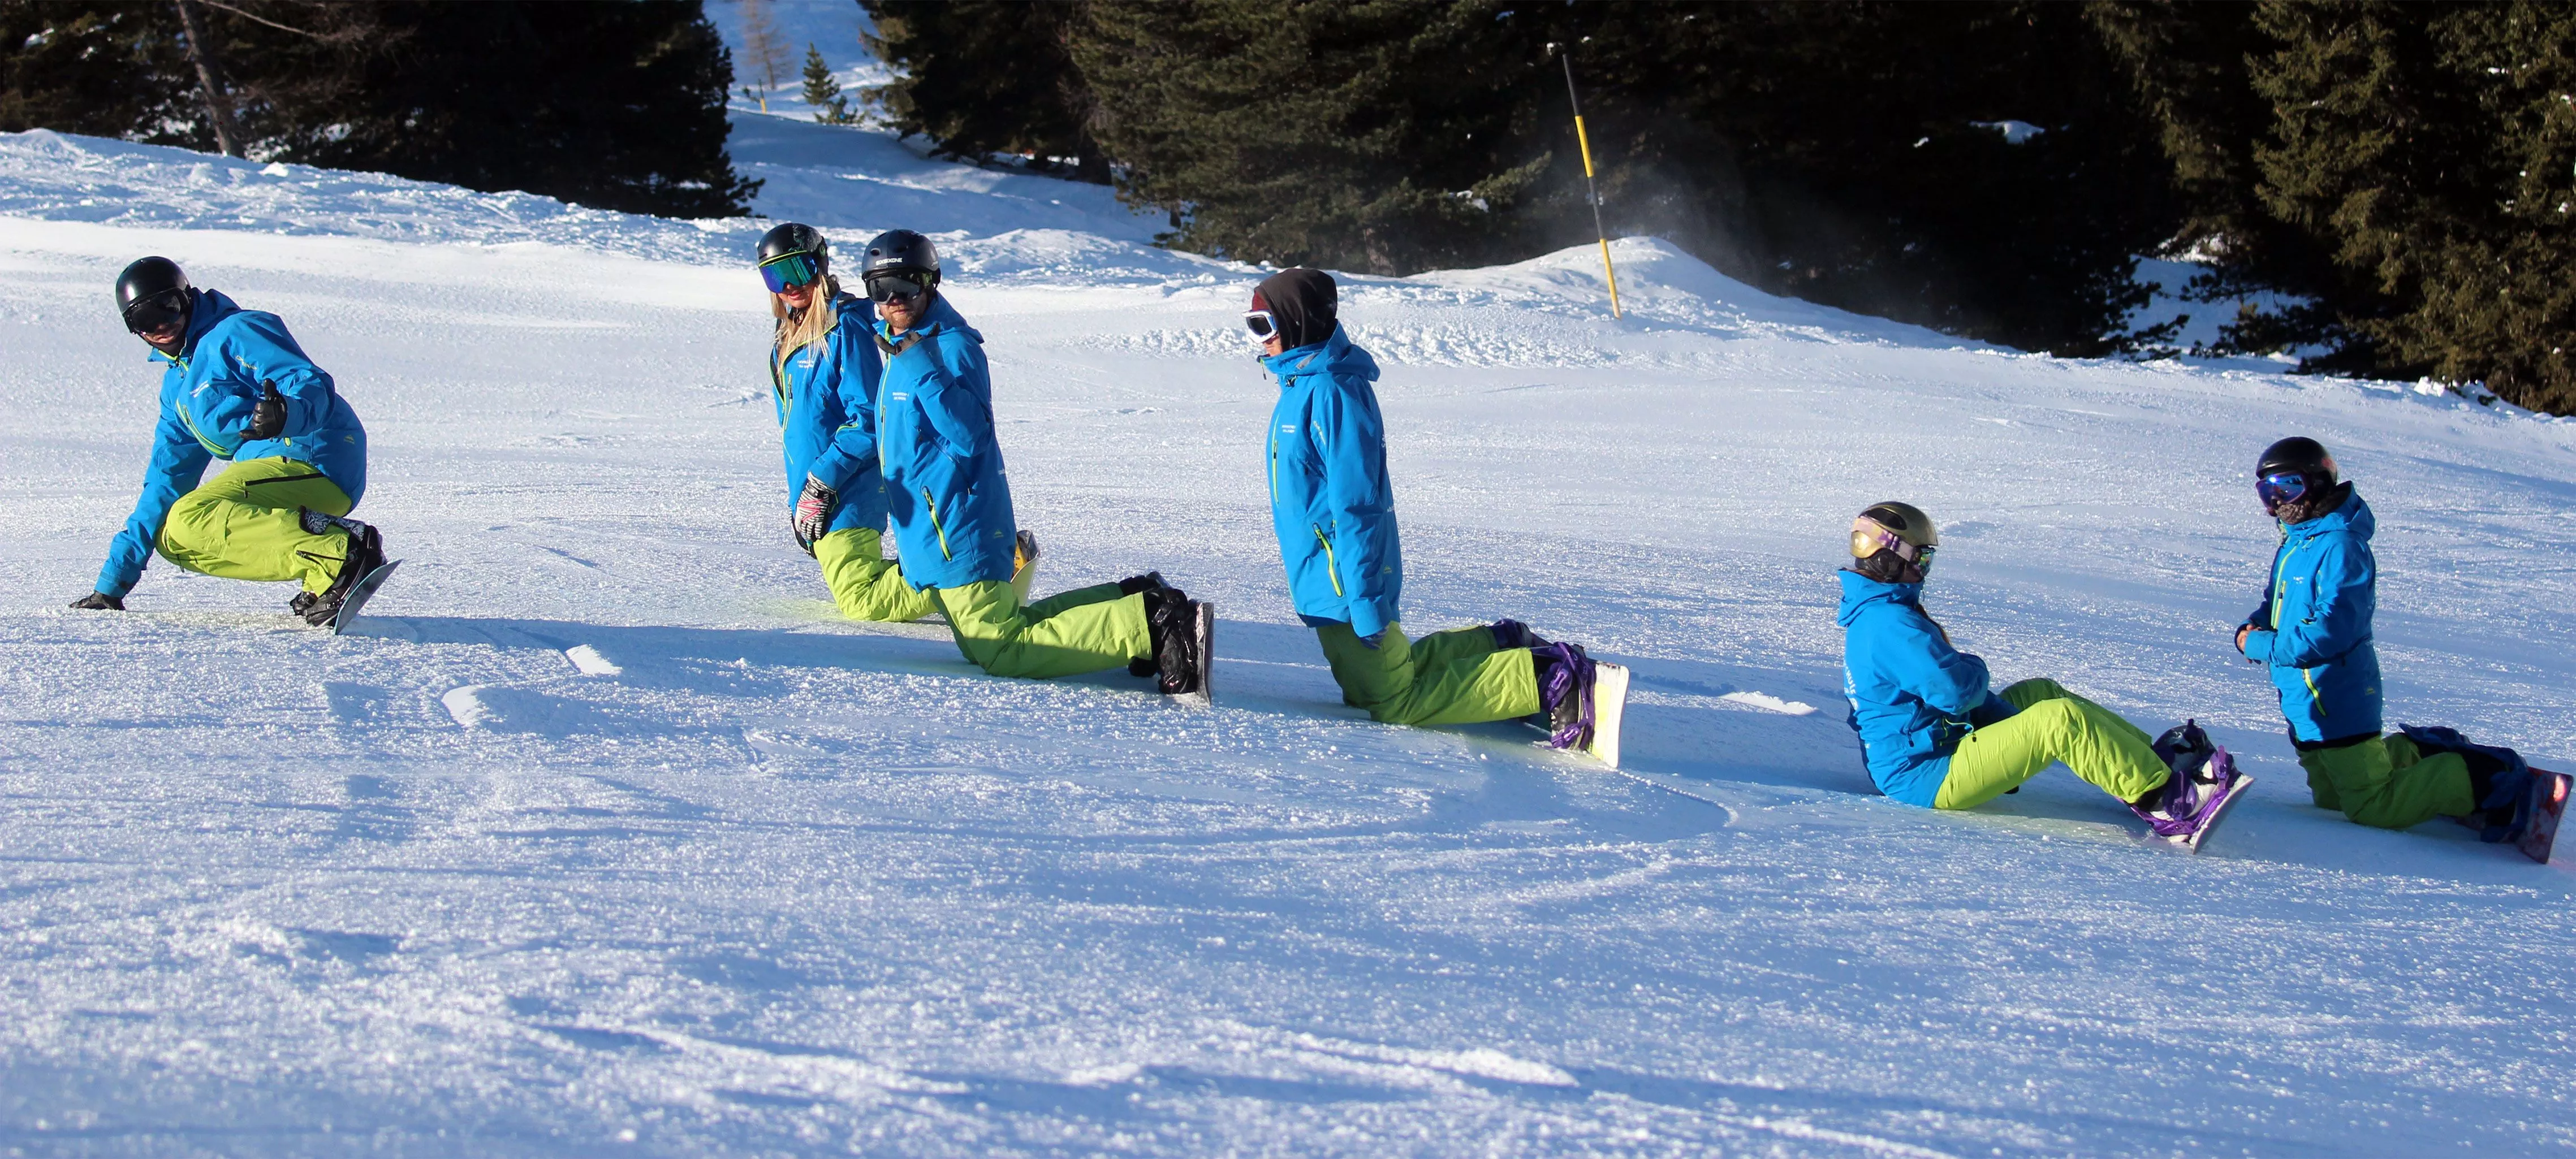 Snowboard School in Ukraine, Europe | Snowboarding - Rated 0.8